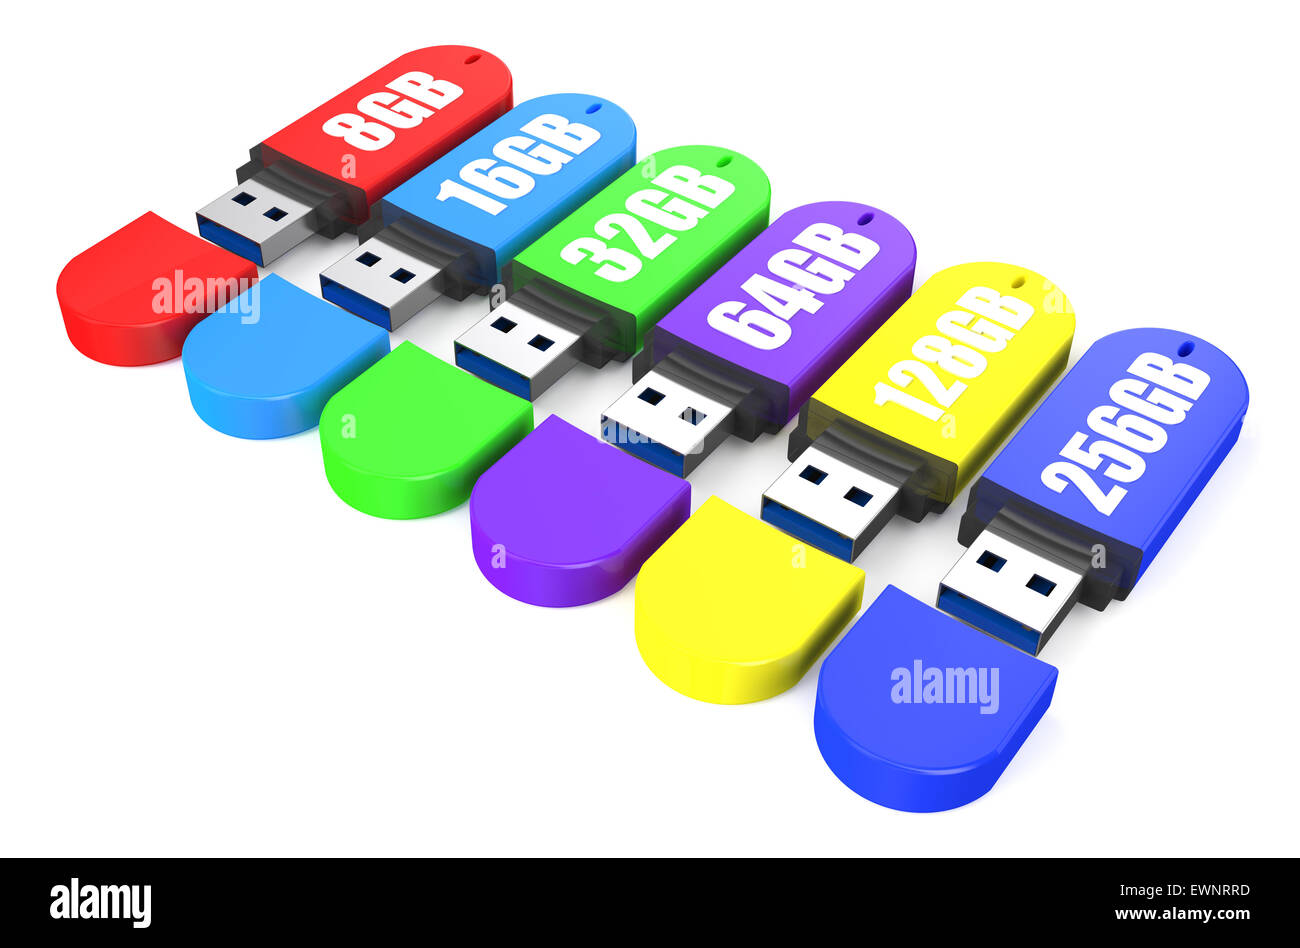 set of multicolored USB flash drive ss 3.0 8,16, 32, 64, 128, 256 gb Stock Photo